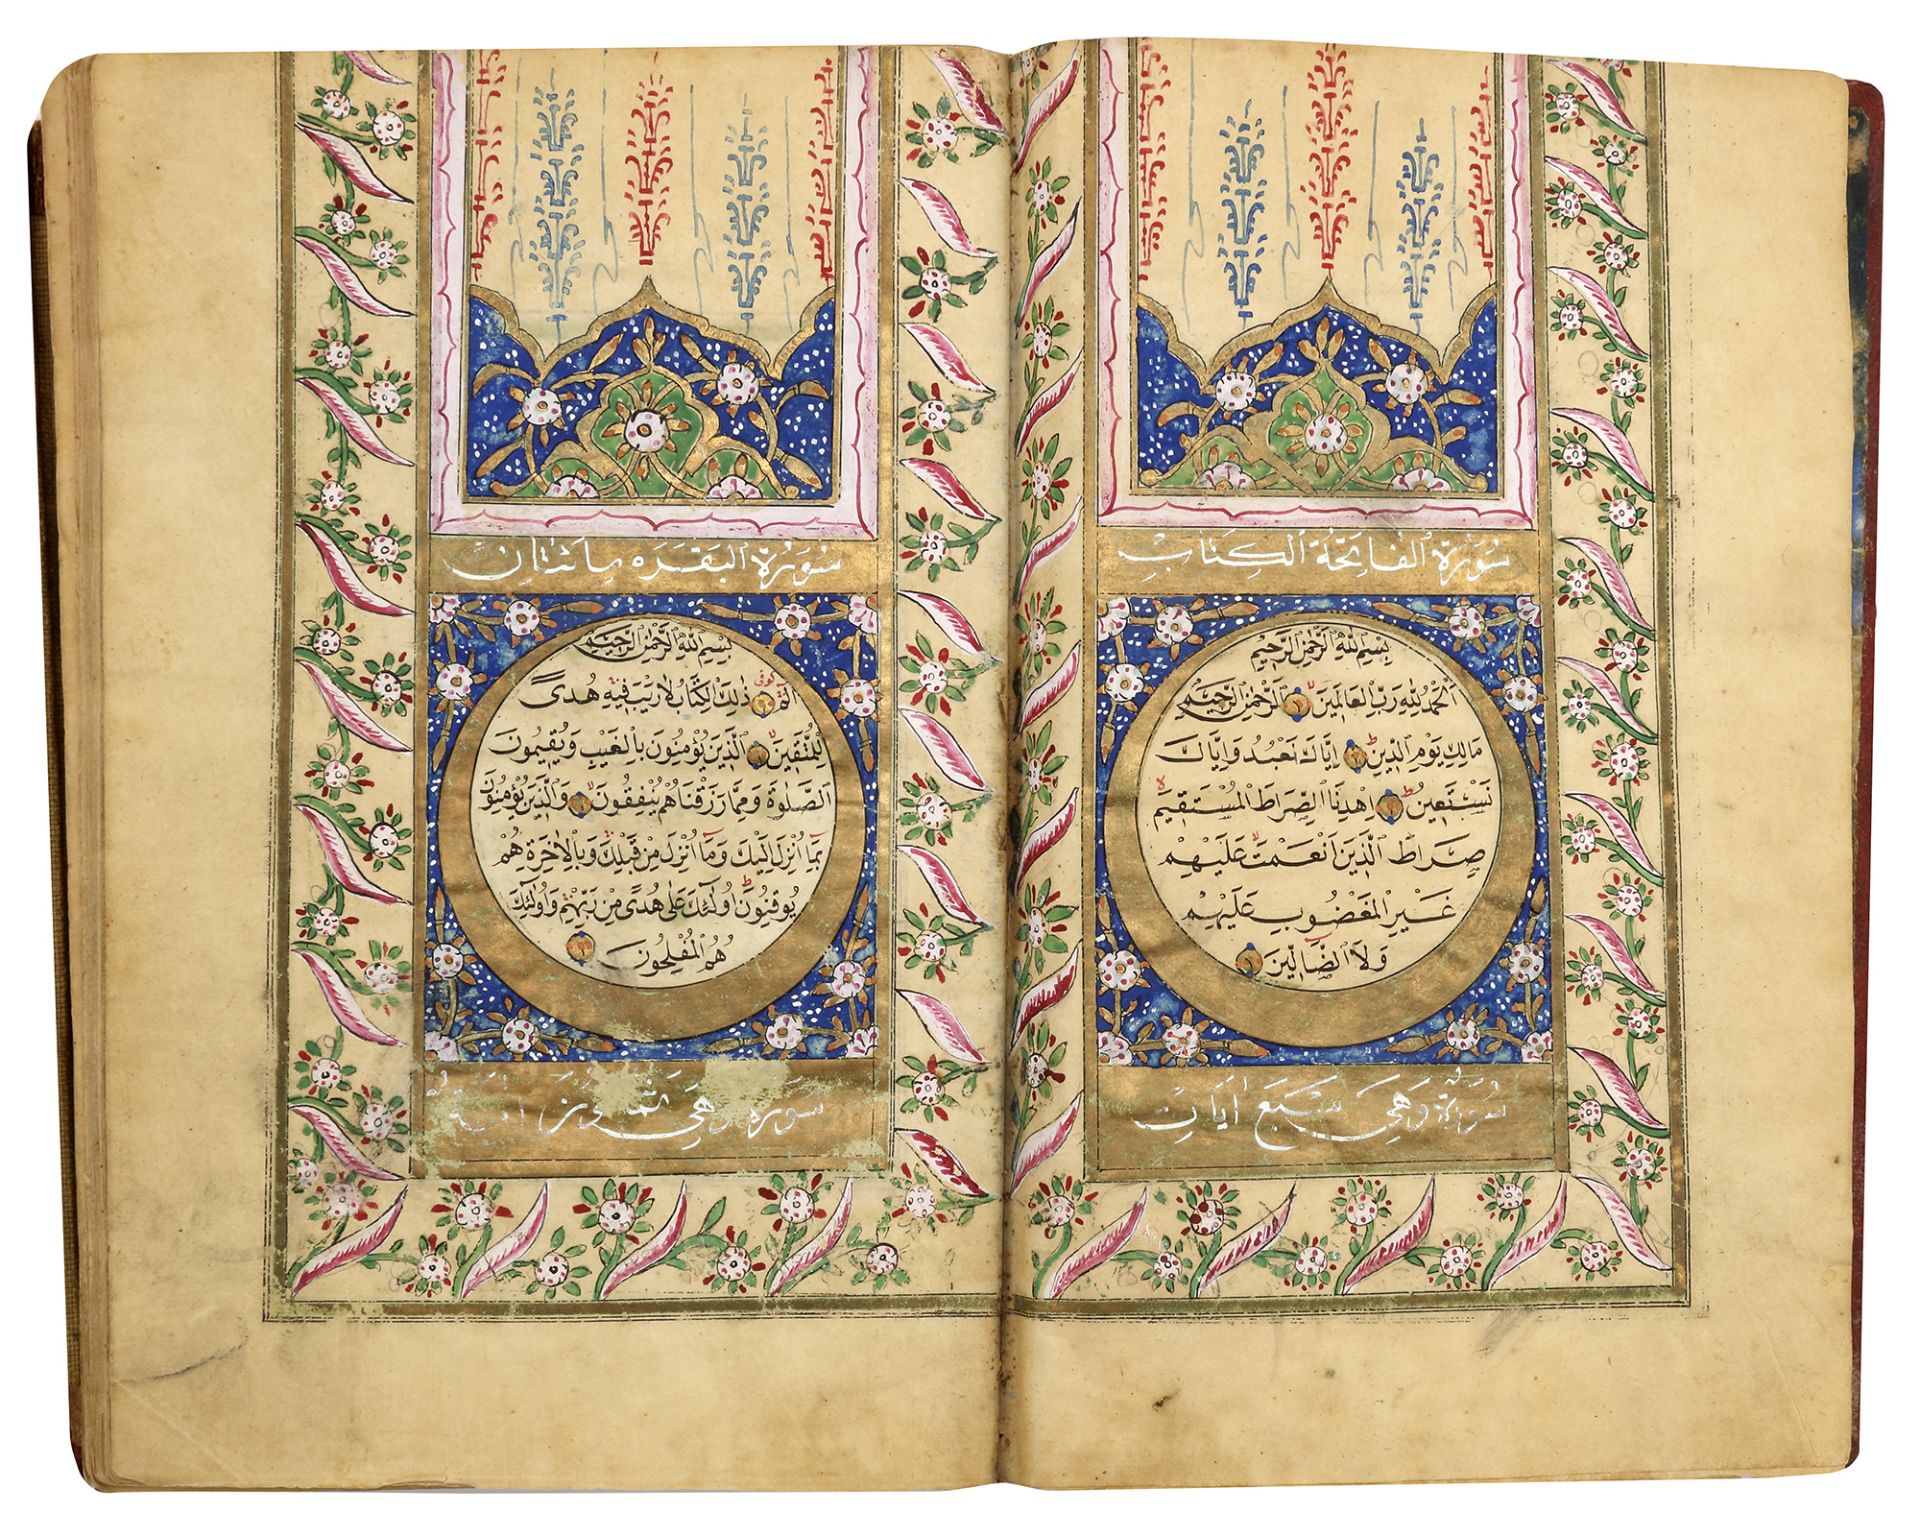 A FINE OTTOMAN QURAN, TURKEY, WRITTEN BY OMAR AL-FAWRABI STUDENT OF OMAR RUSHDI, DATED 1273 AH/1856